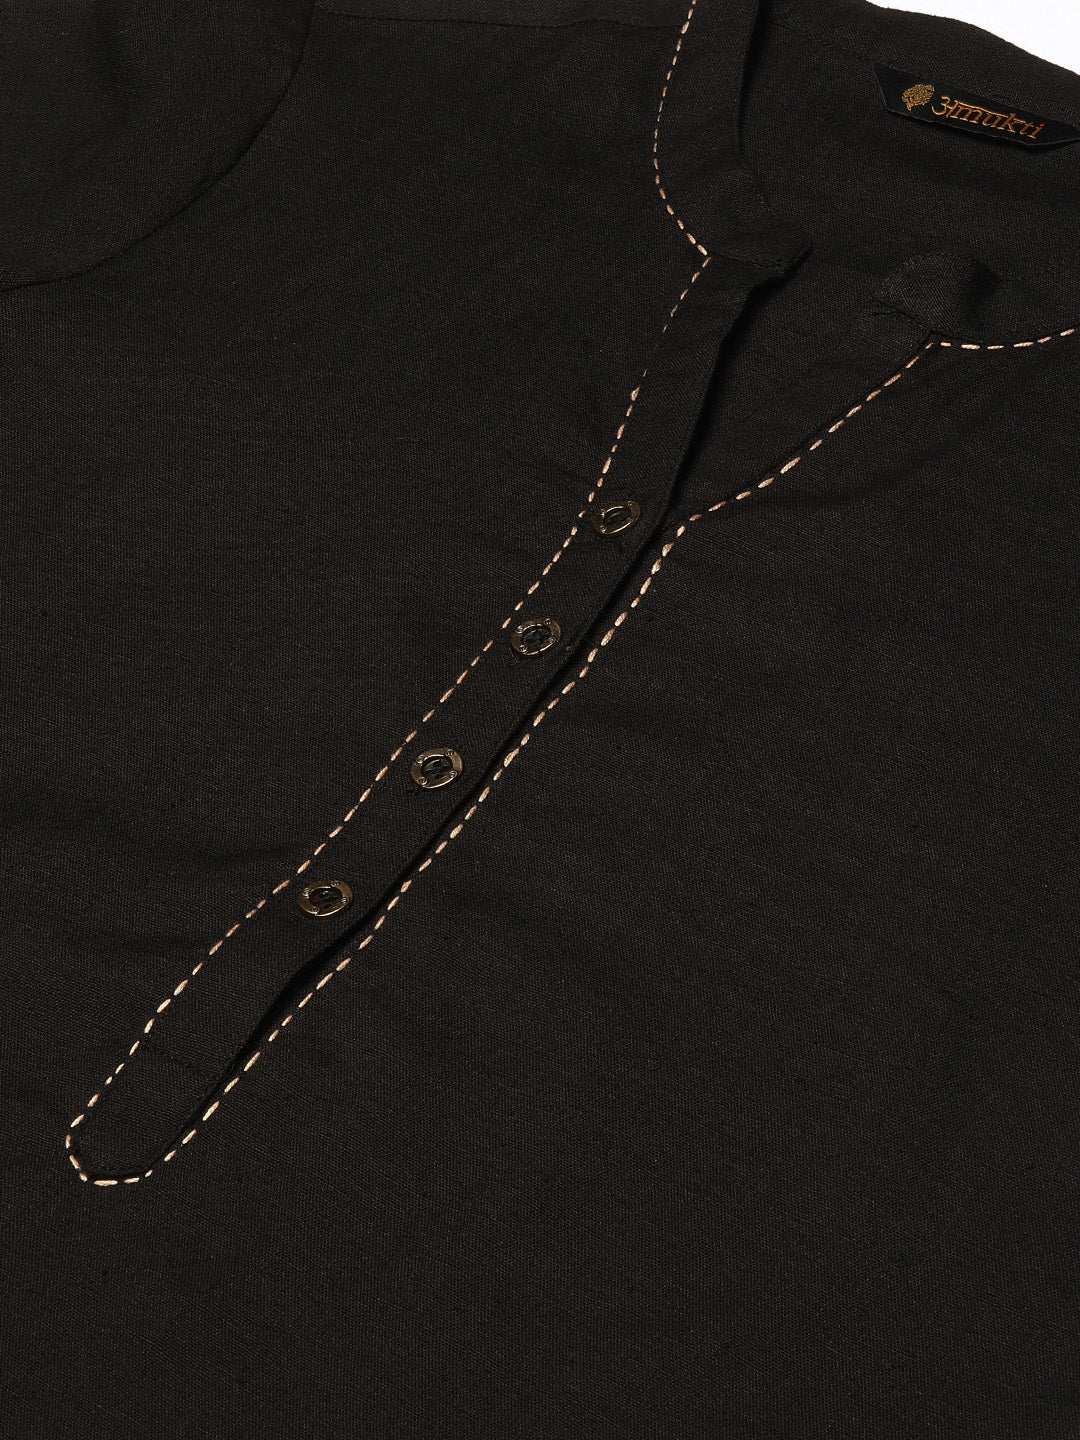 Black Embroidery Straight Cut Kurta with a pocket